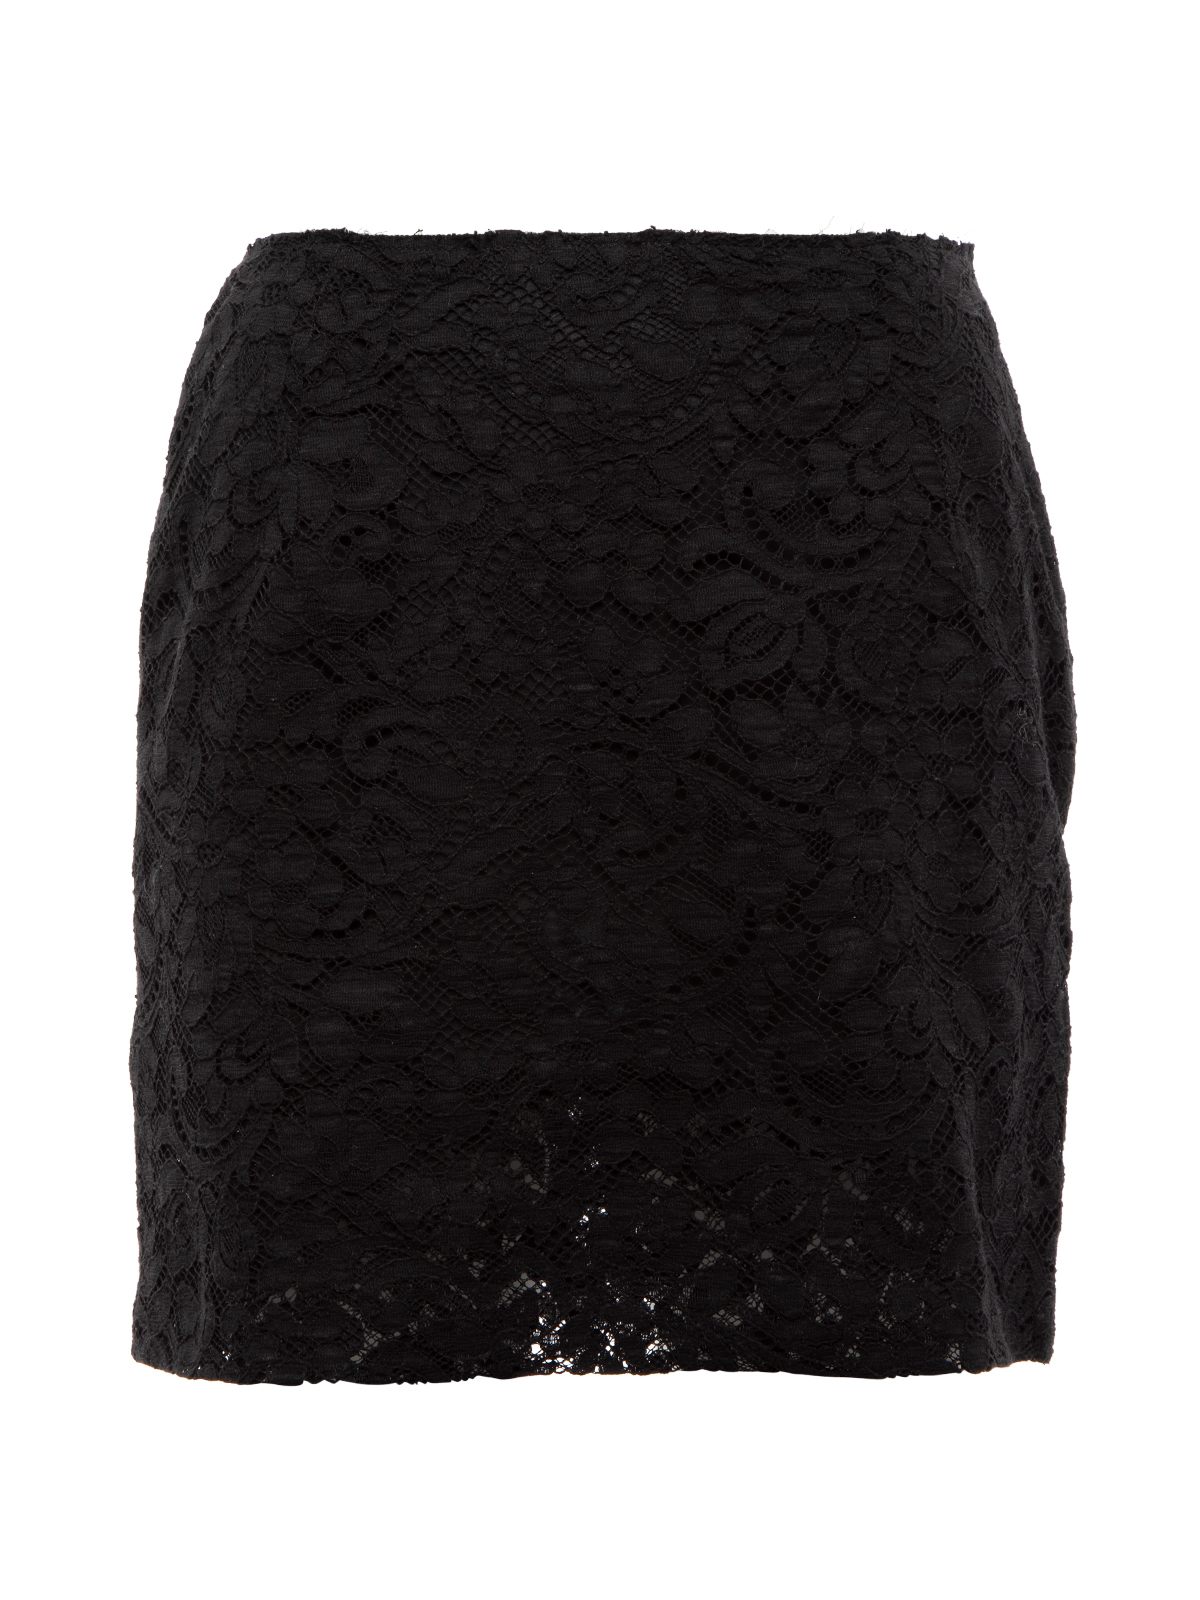 Lanvin Lace Black Skirt